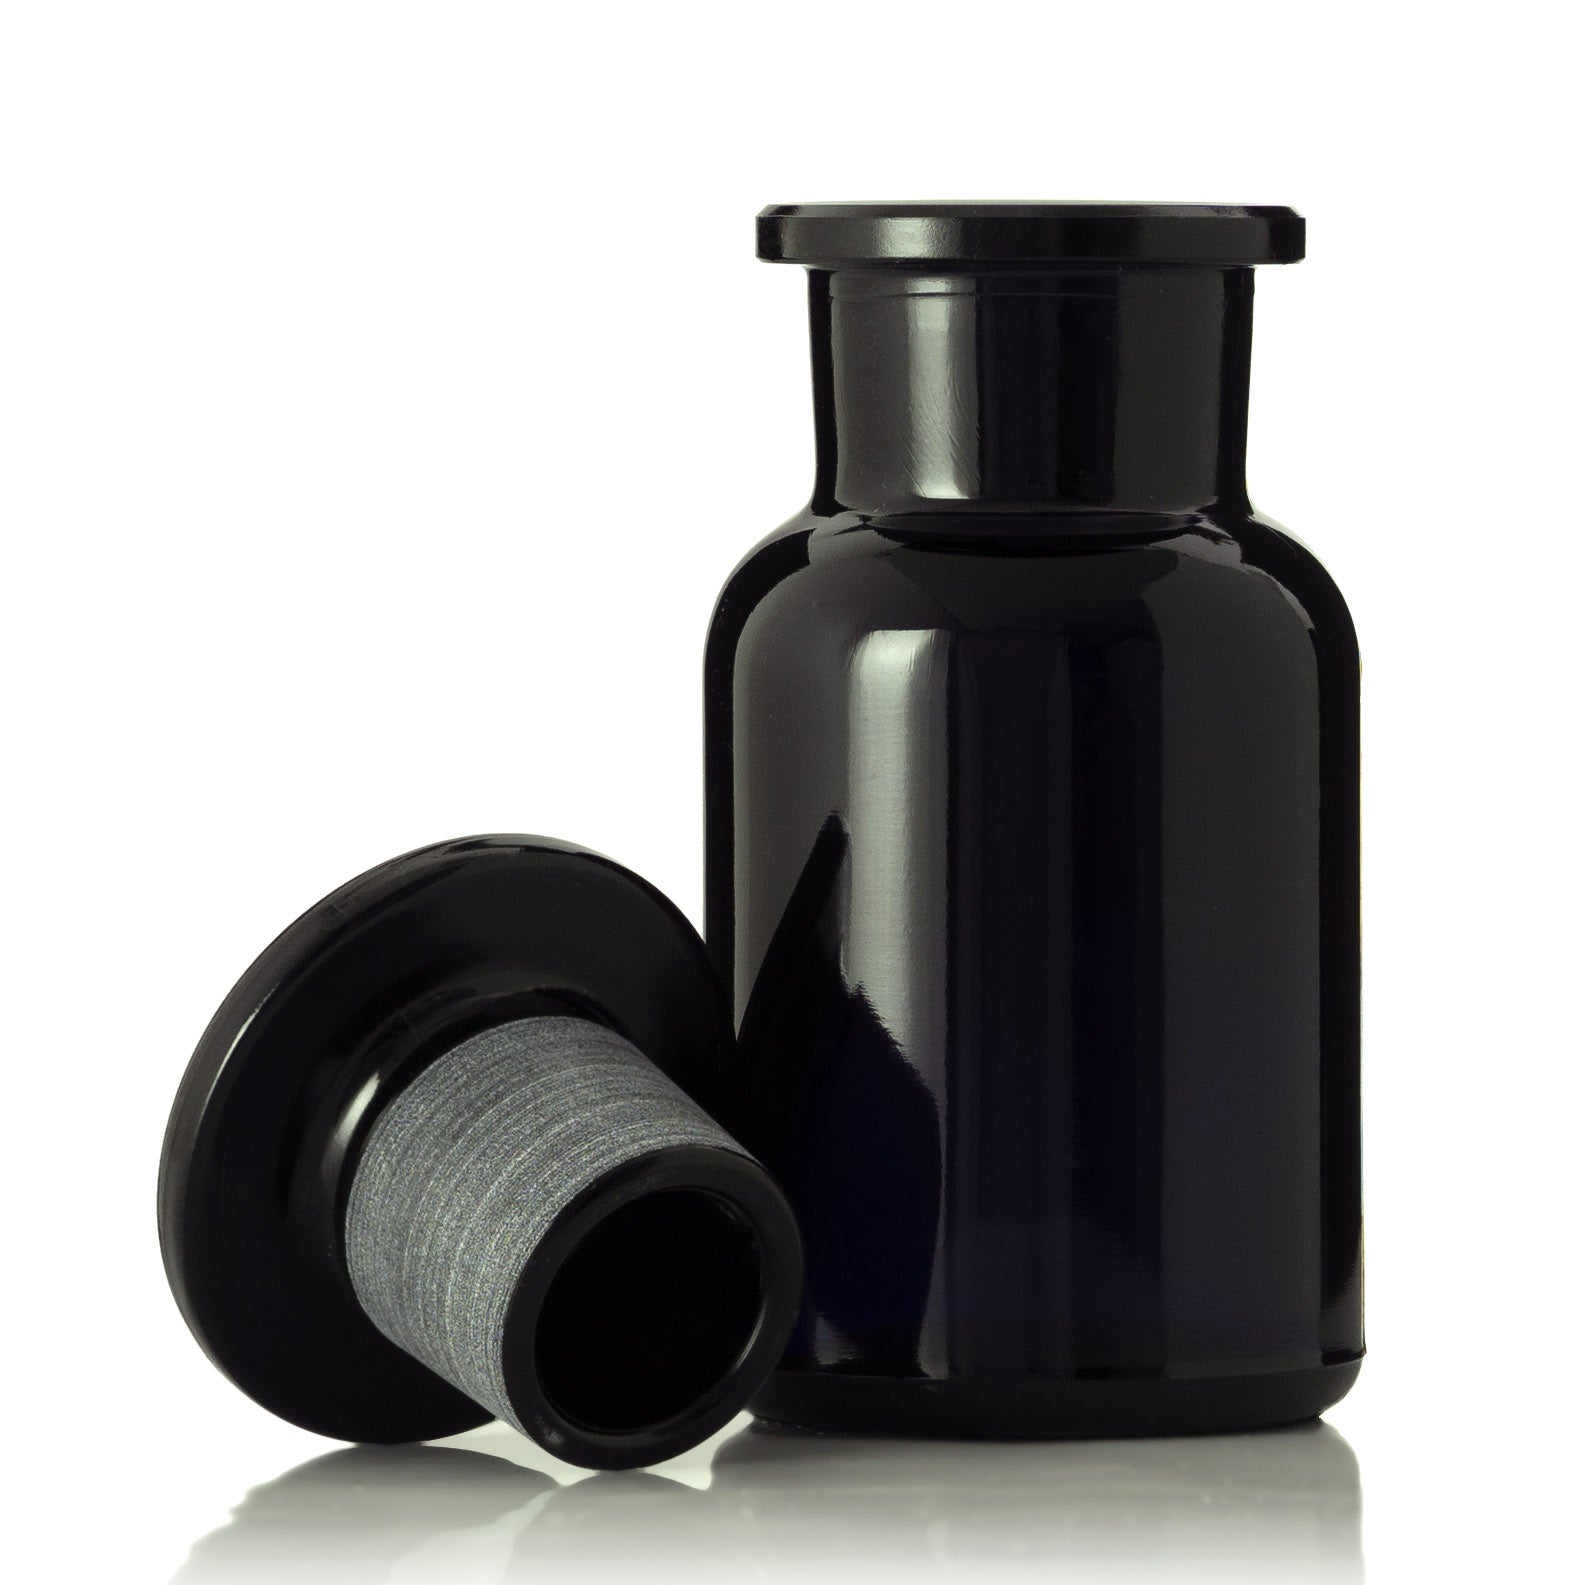 1 Liter Ultraviolet Black Glass Apothecary Jar – Artanis Home